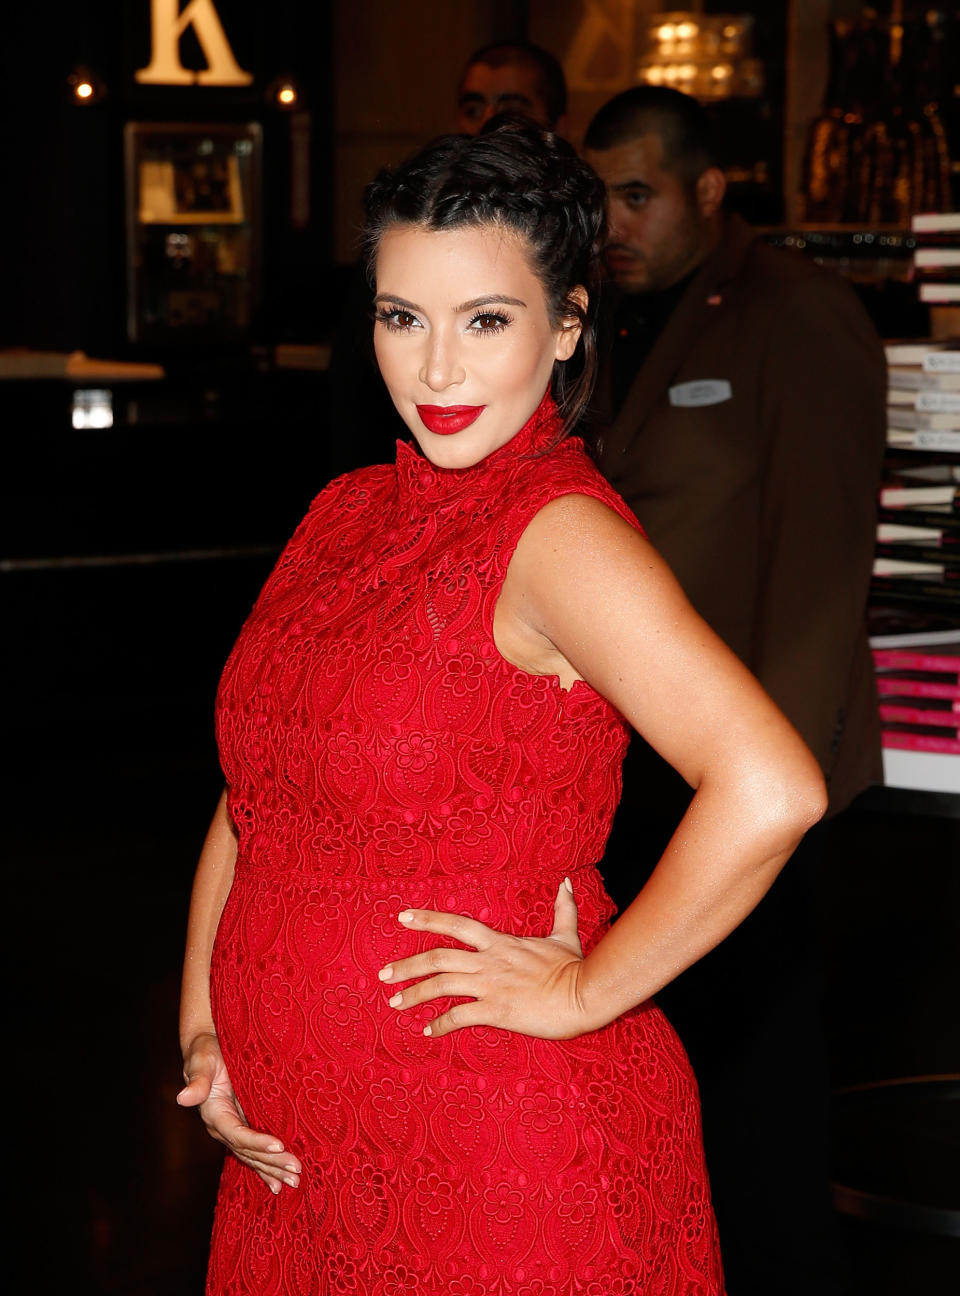 Kim Kardashian Appears At Kardashian Khaos Store At The Mirage (Isaac Brekken / Getty Images)